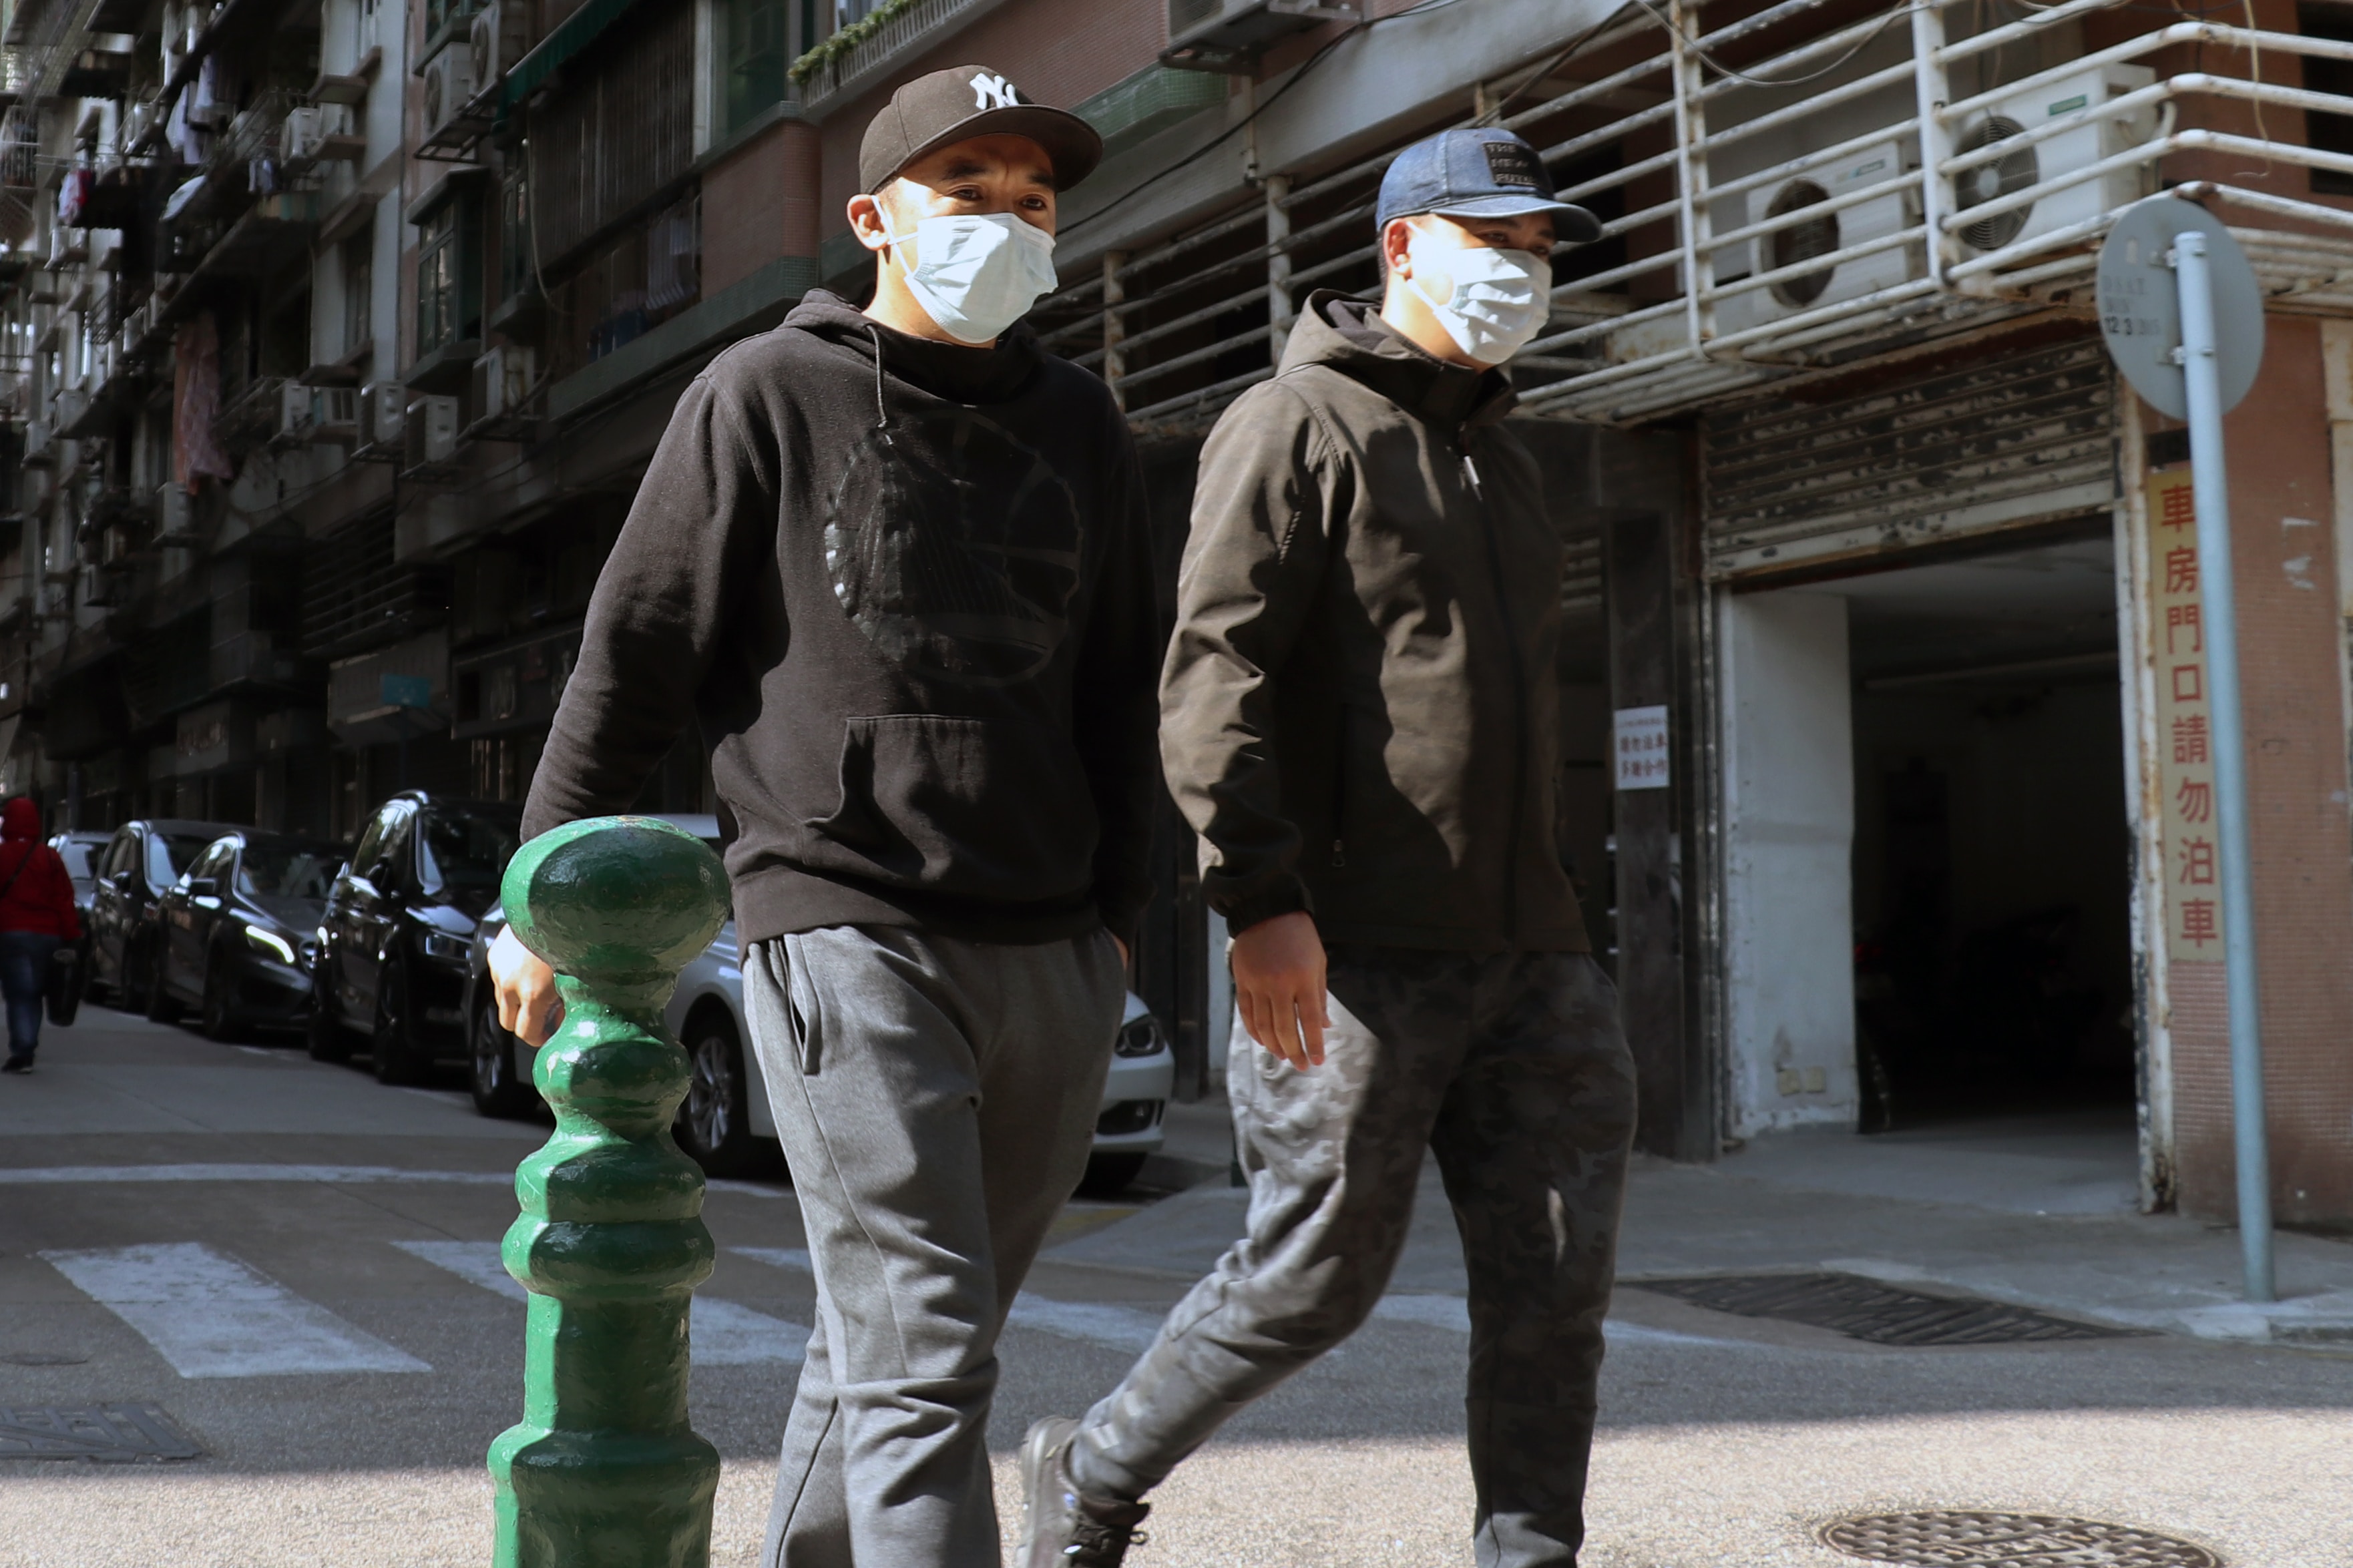 Two men wearing masks while walking down a street